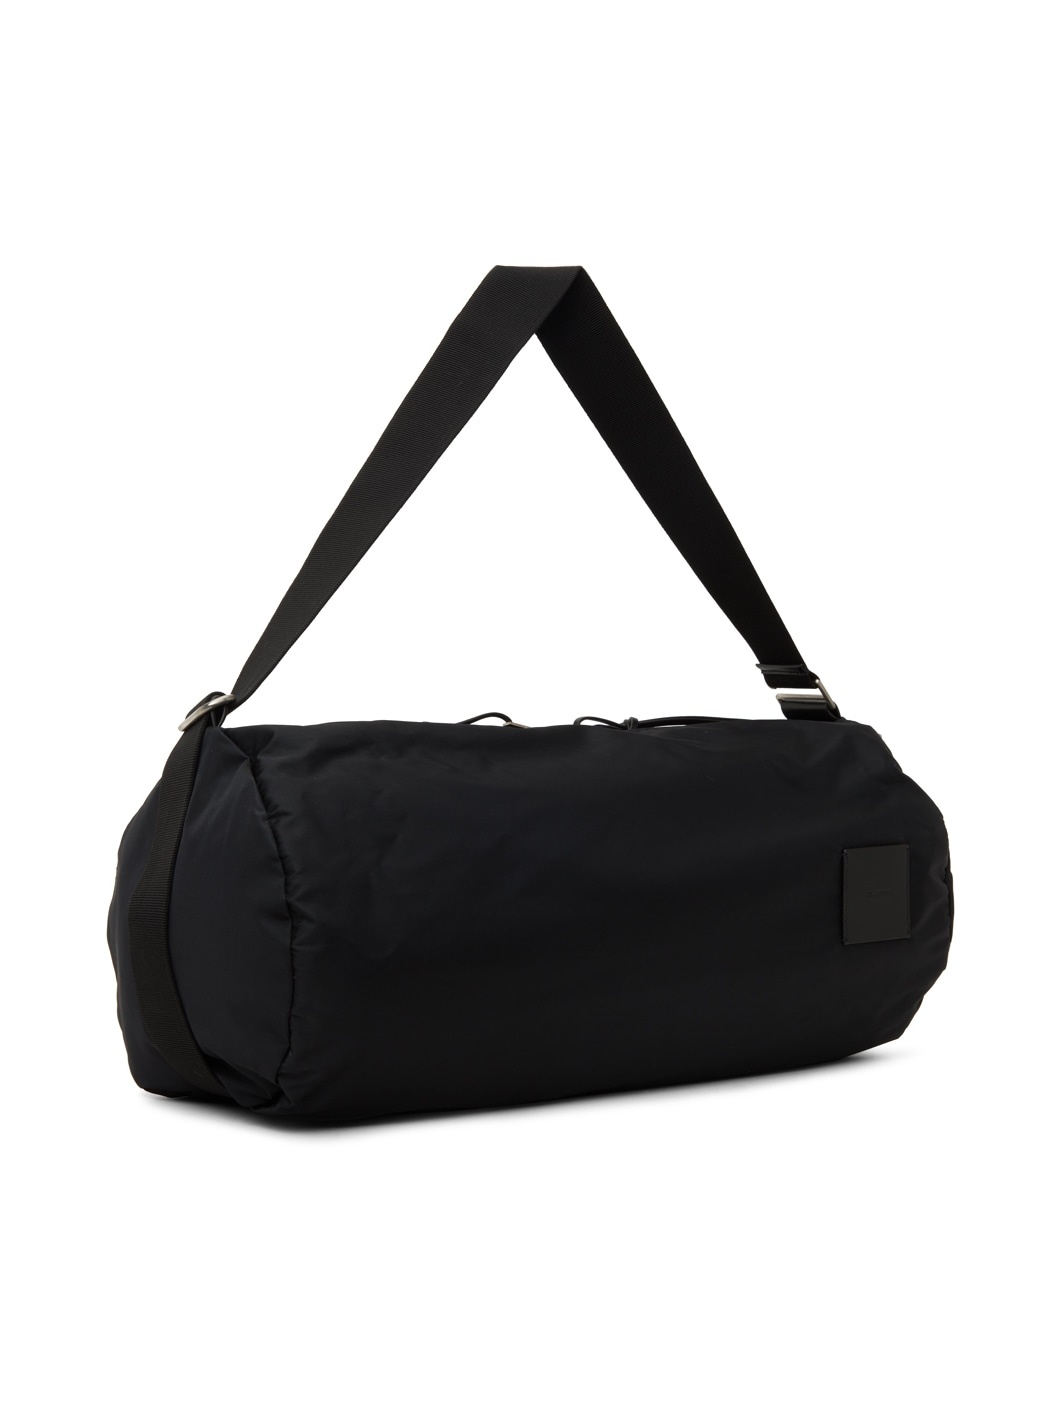 Black Gym Bag - 2